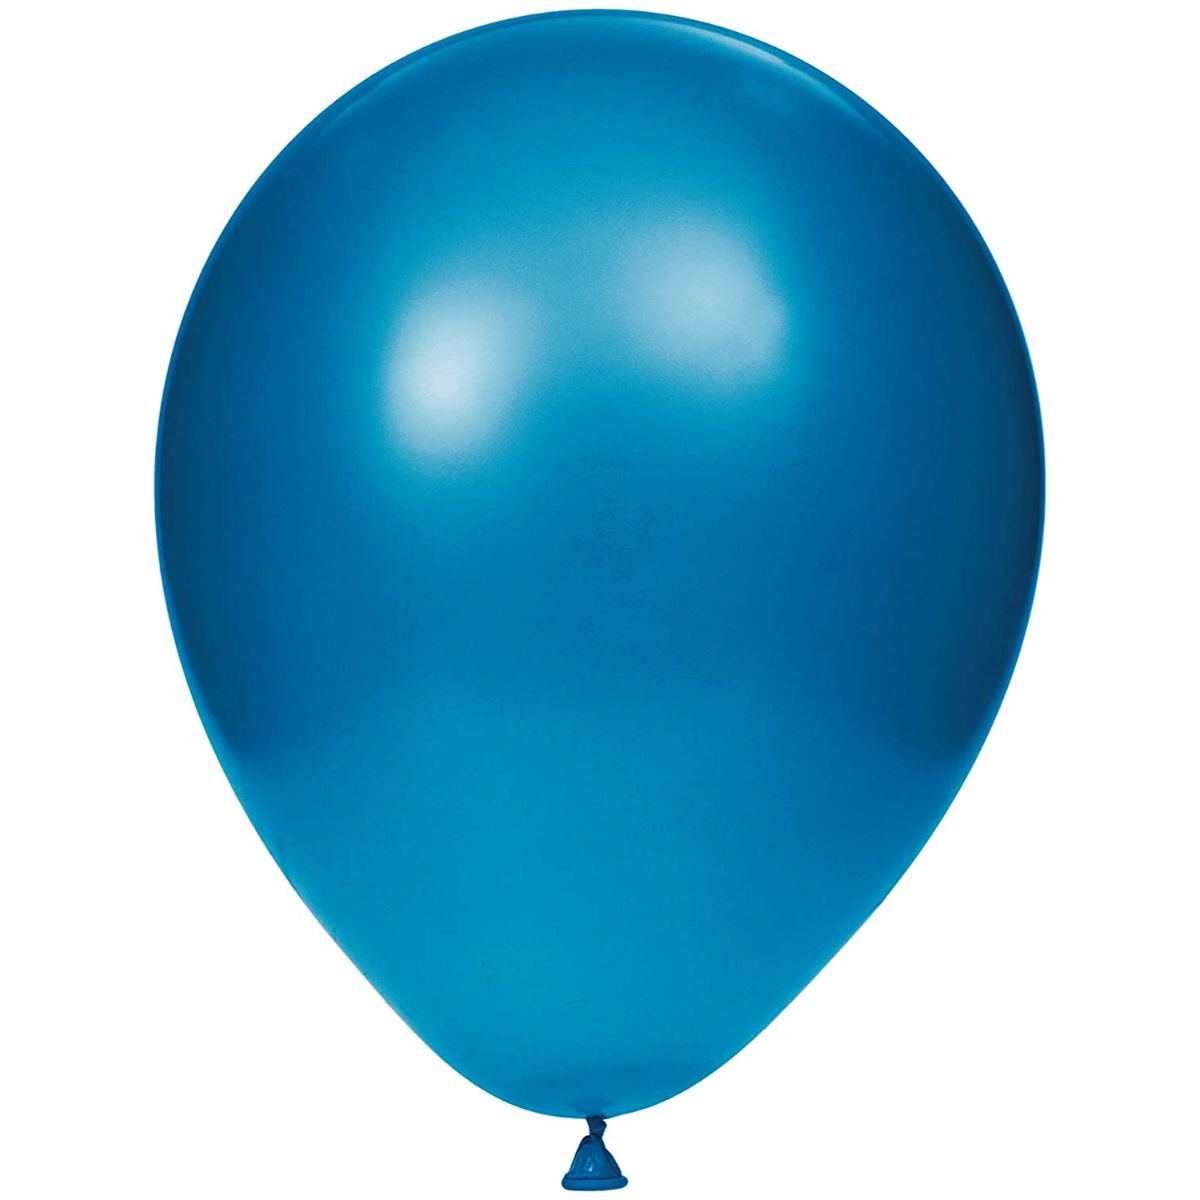 Creative Converting Latex Balloons 15ct